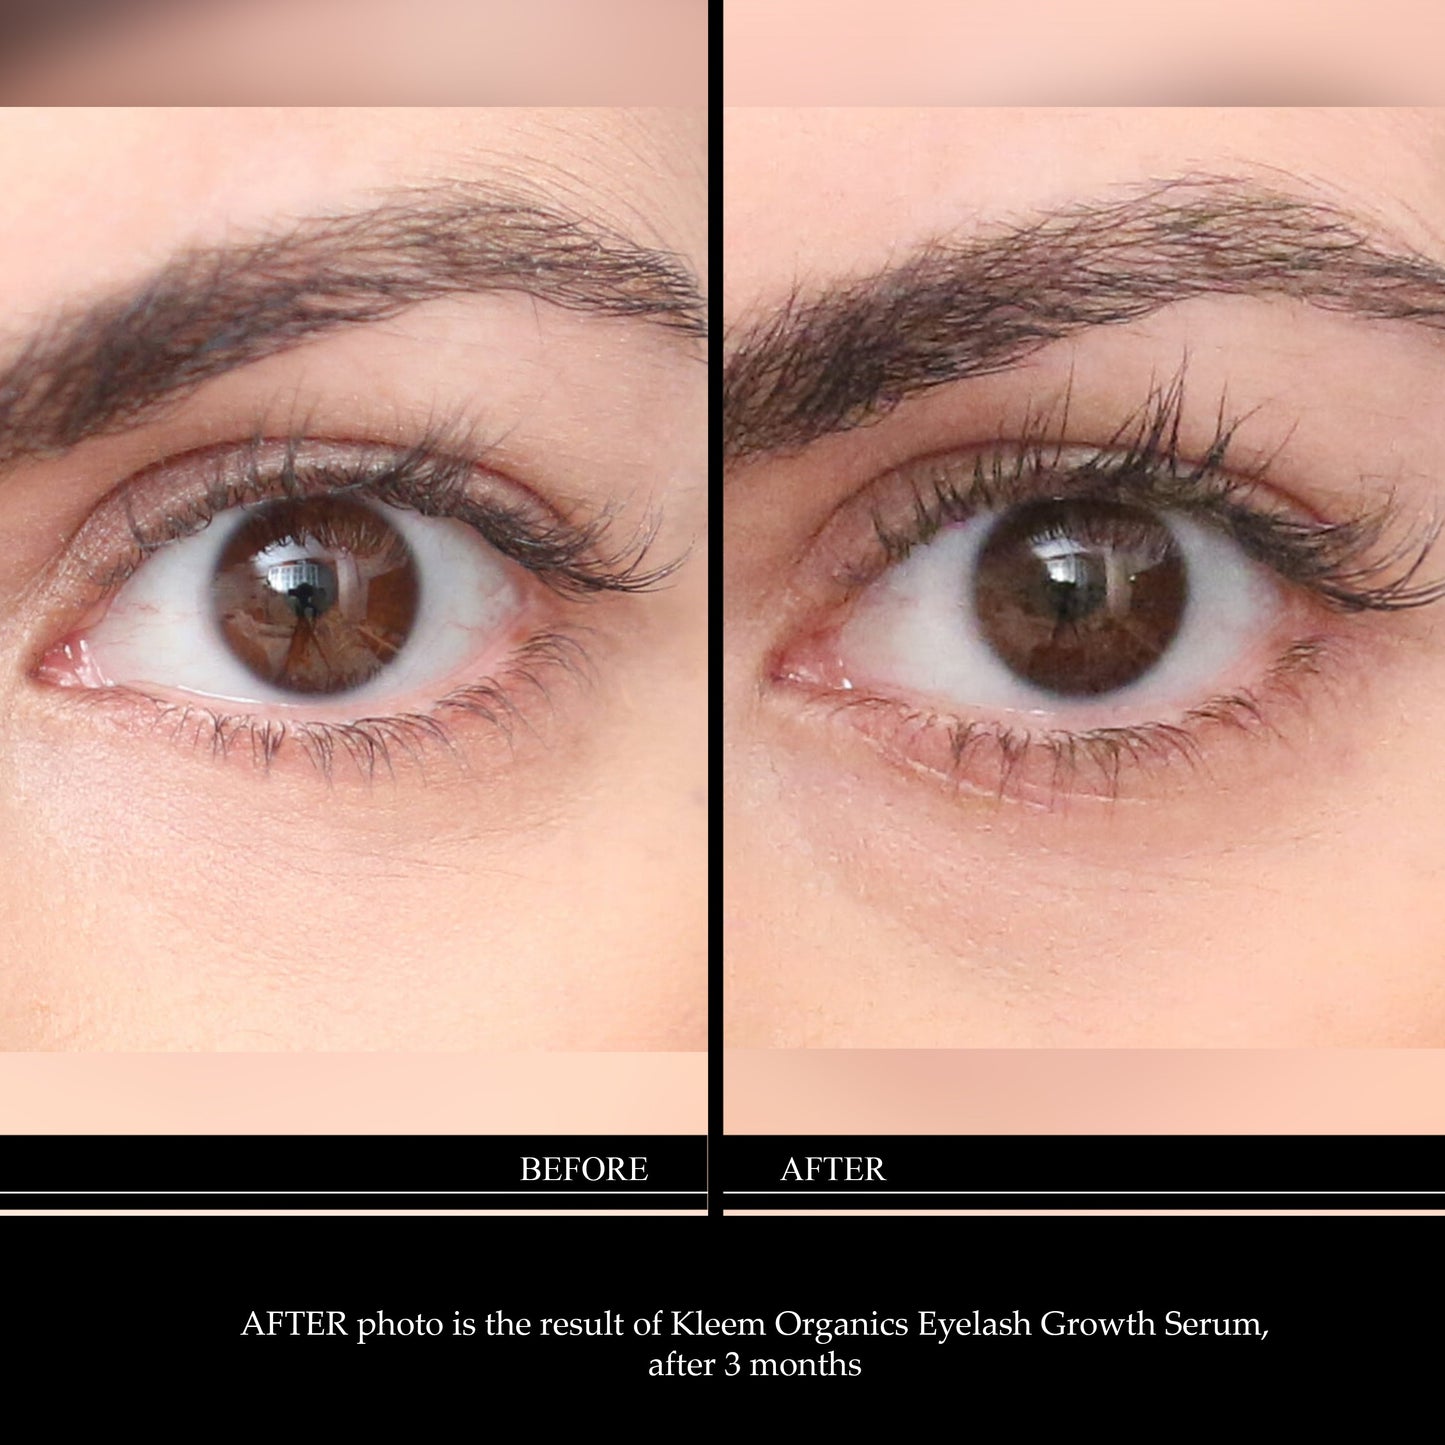 2-In-1 Eyelash And Eyebrow Growth Serum